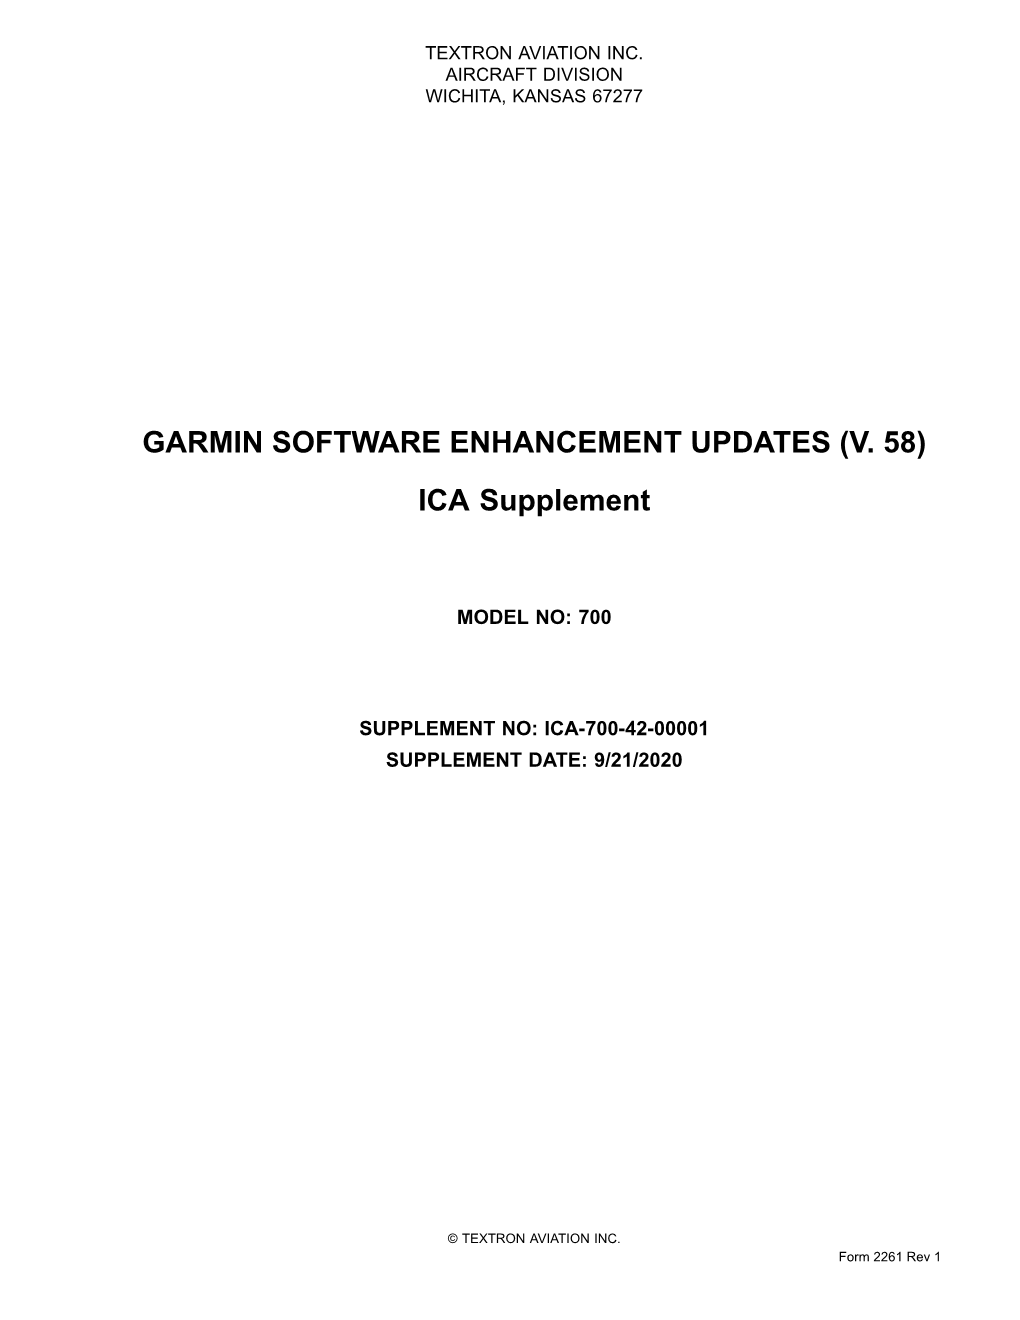 GARMIN SOFTWARE ENHANCEMENT UPDATES (V. 58) ICA Supplement